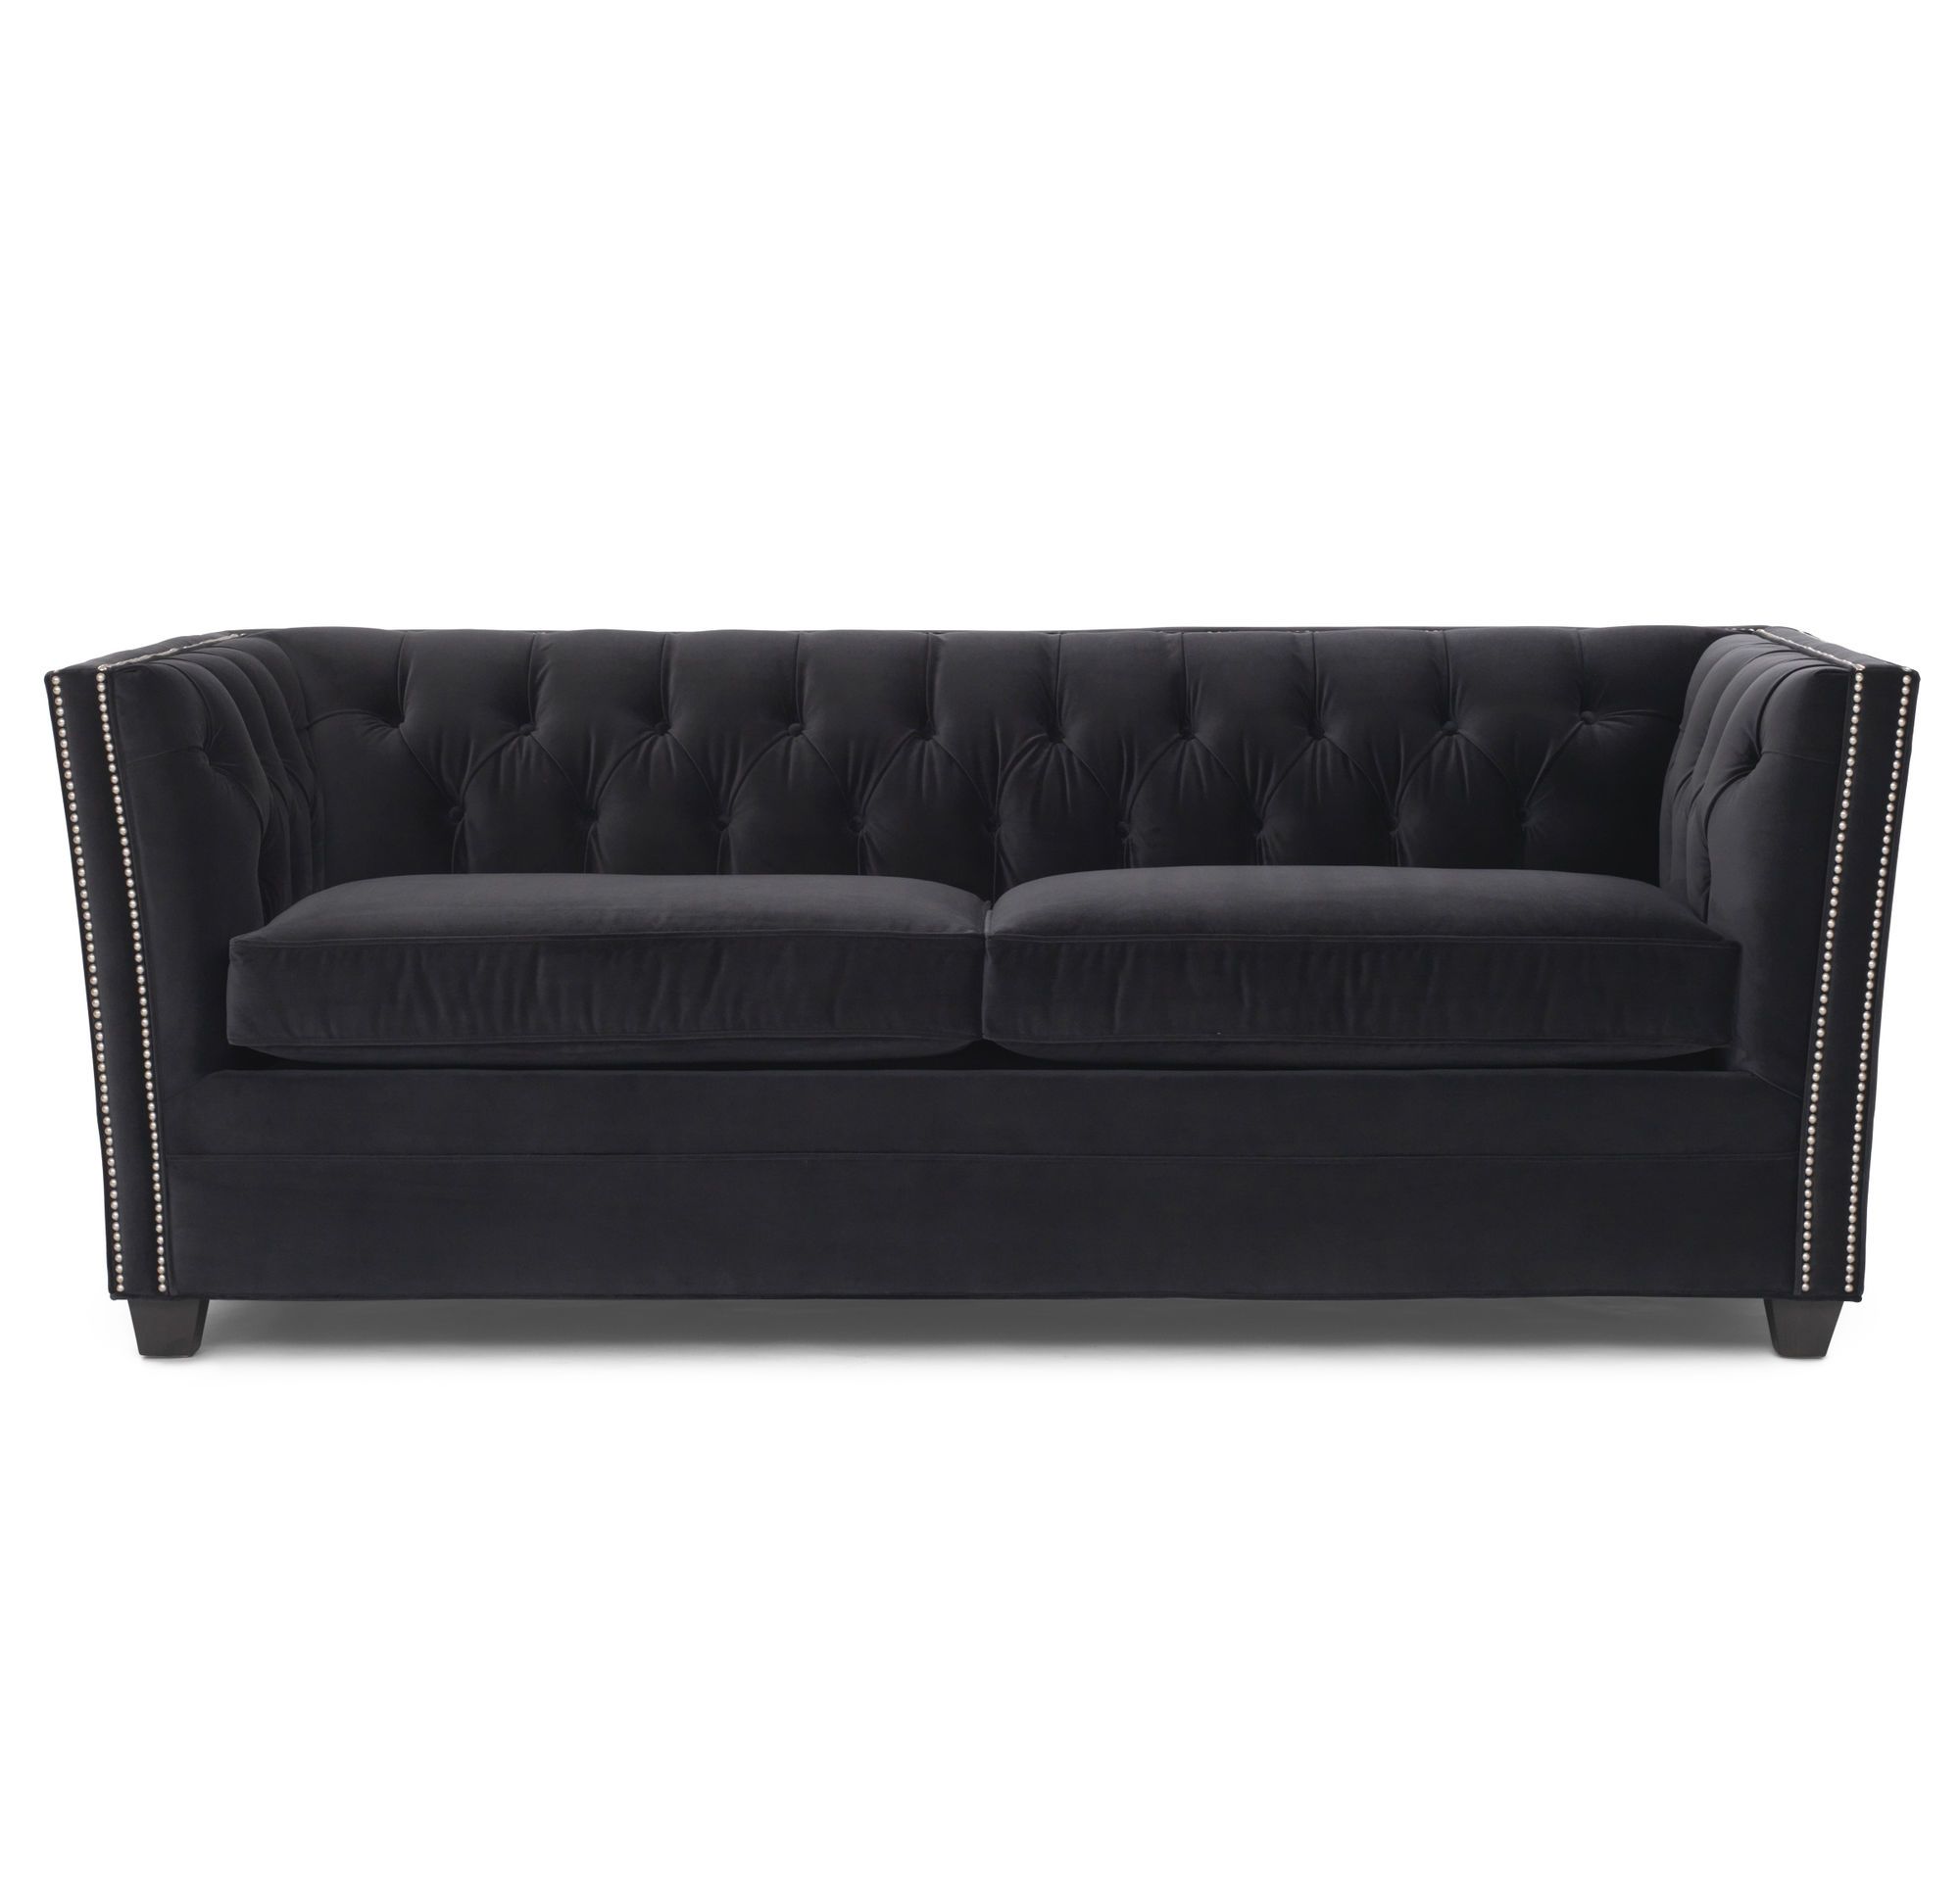 Allie Dark Grey Sofa Chairs Regarding Famous All Sofa : Fiona Super Luxury Black Furniture Foam Queen Sleeper A (View 6 of 20)